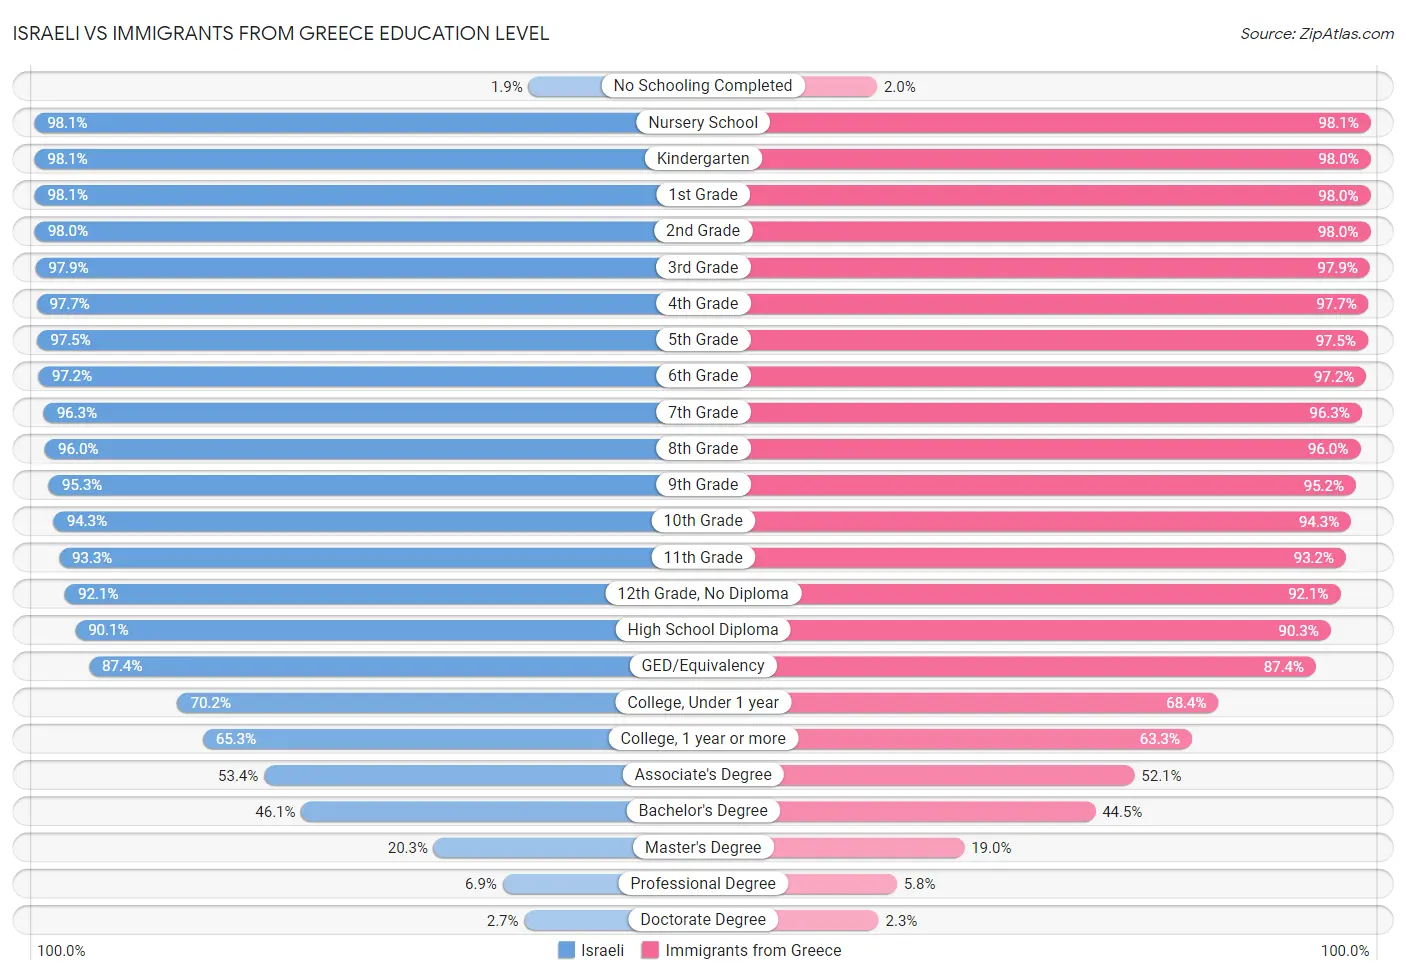 Israeli vs Immigrants from Greece Education Level